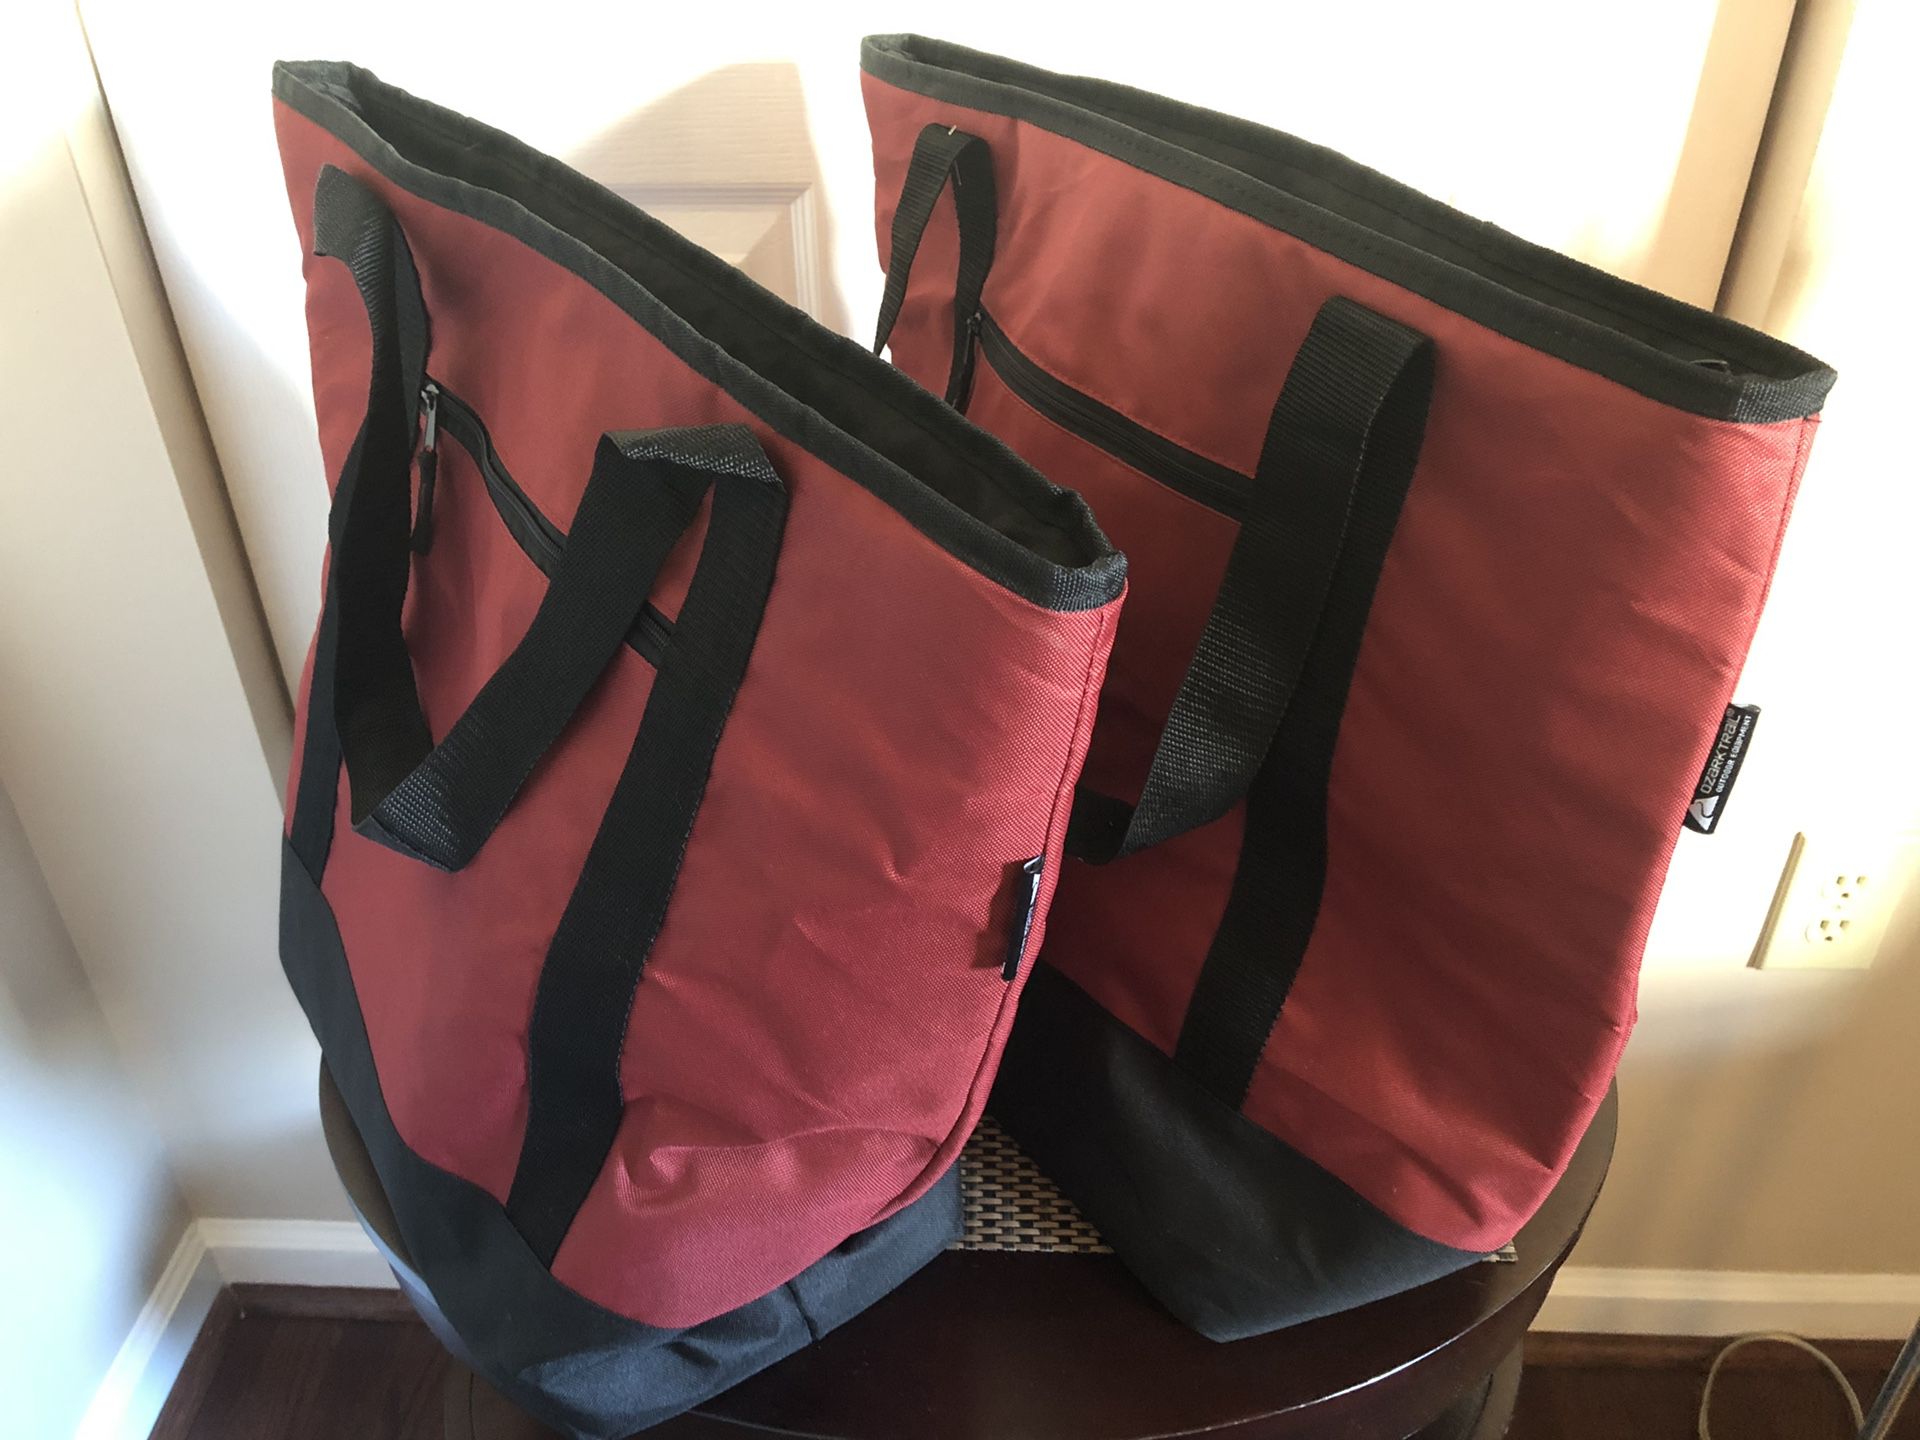 Large, lightweight cooler bags